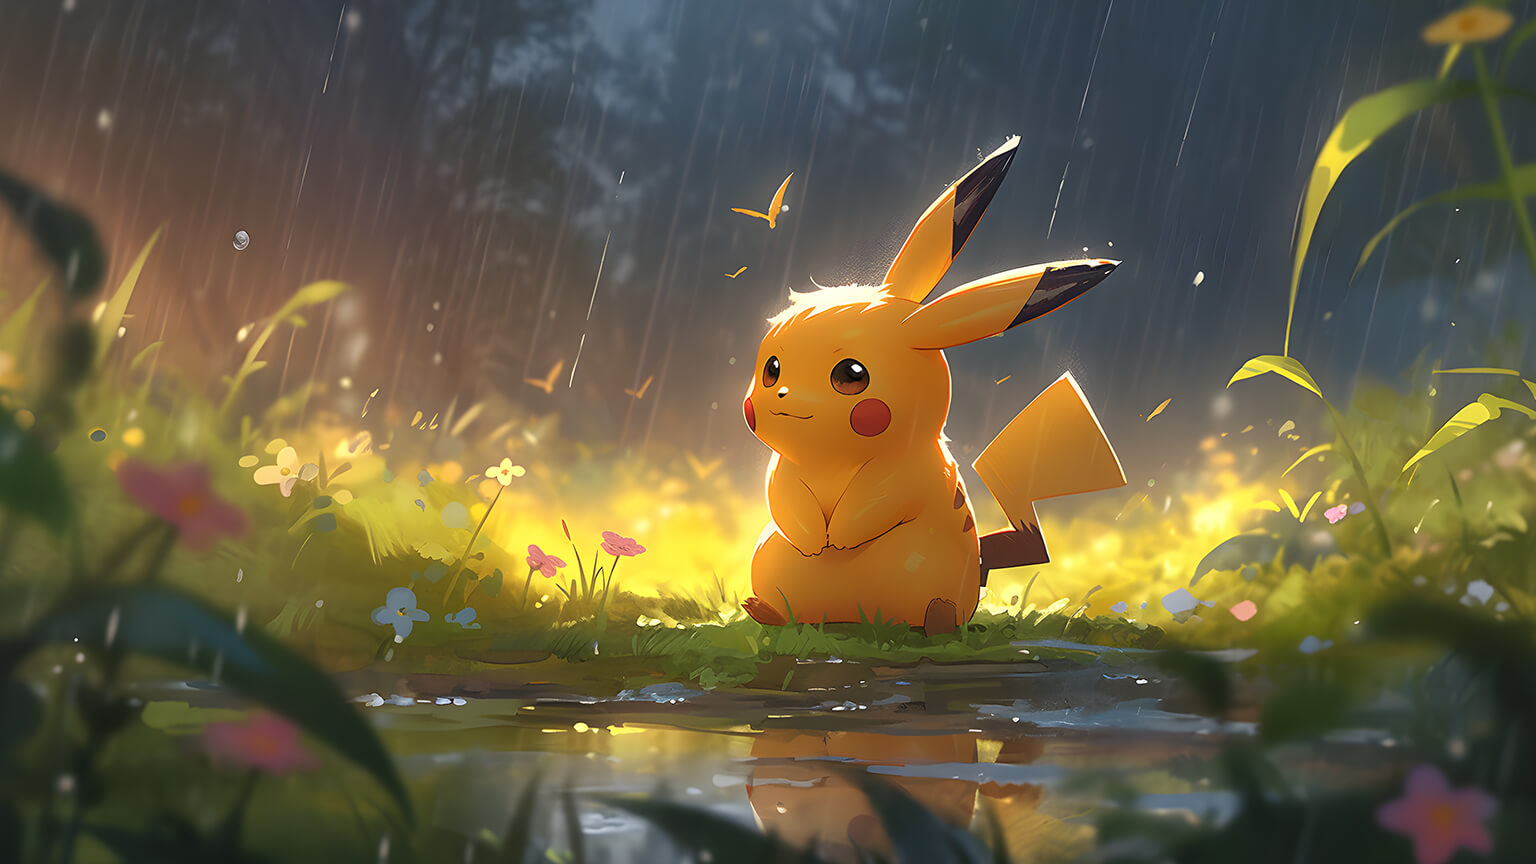 Cute Pokemon Pikachu Desktop Wallpaper